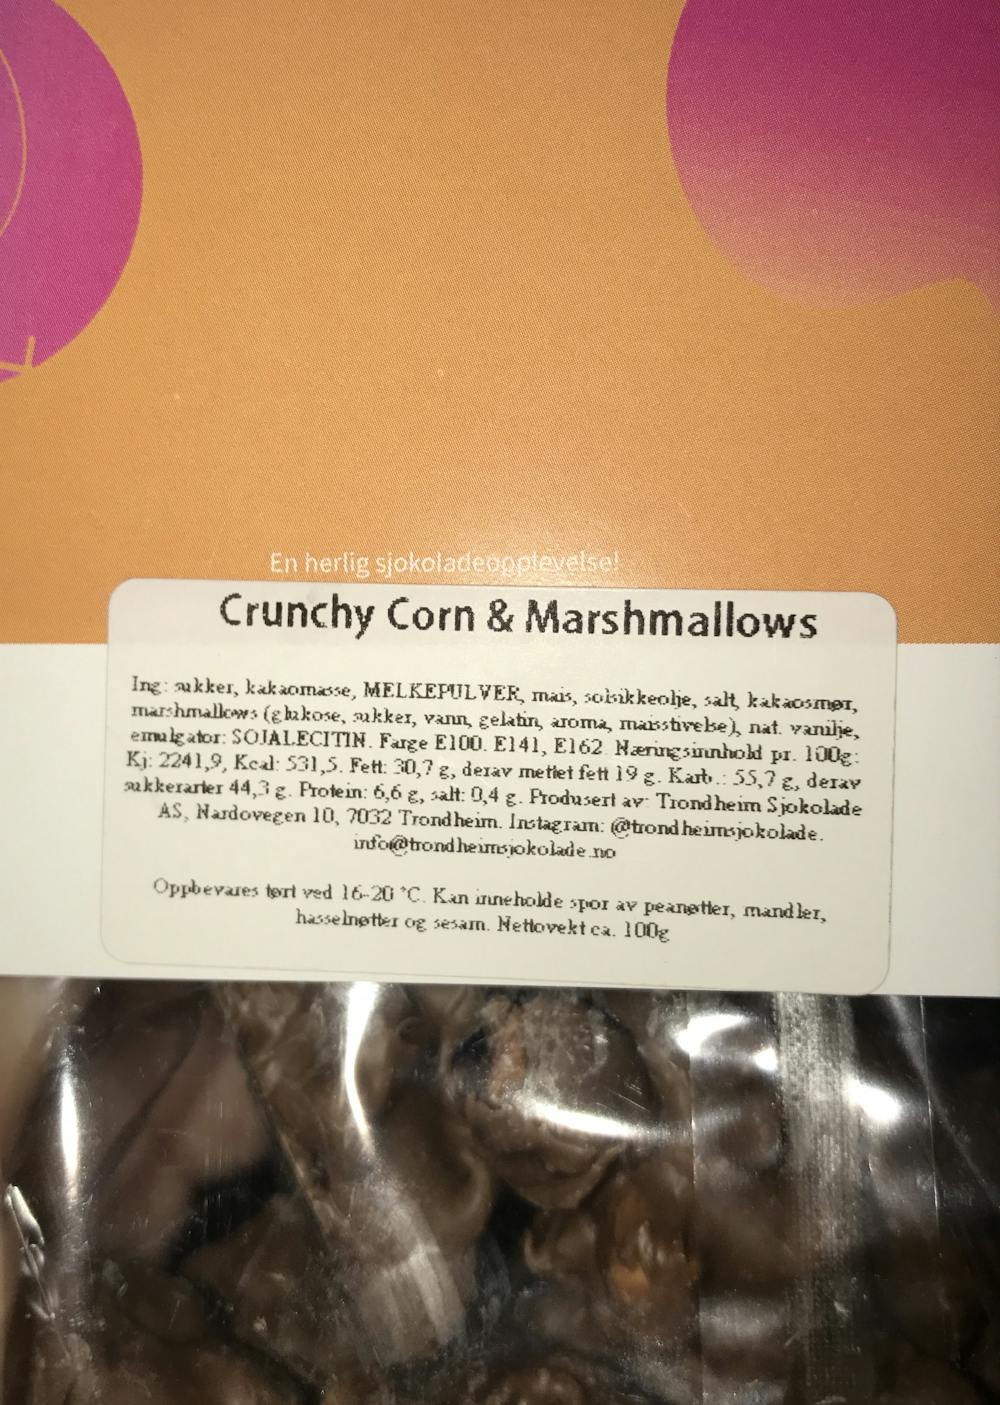 Ingredienslisten til Crunchy corn & marshmallow, Cielo